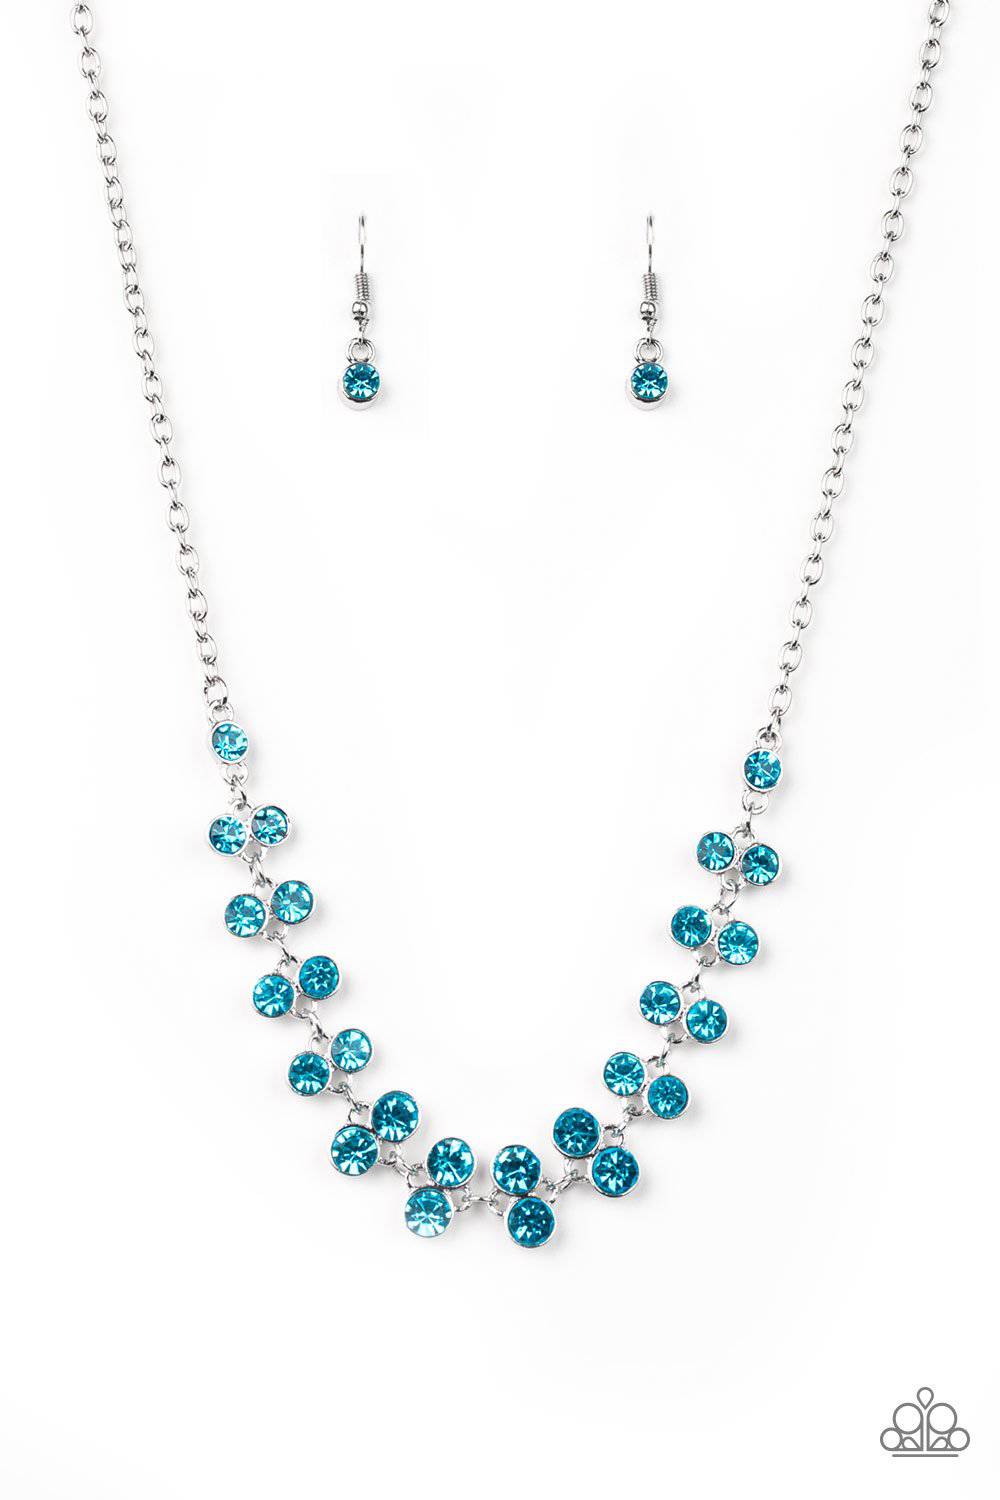 Super Starstruck - Blue Rhinestone Necklace - Paparazzi Accessories - GlaMarous Titi Jewels